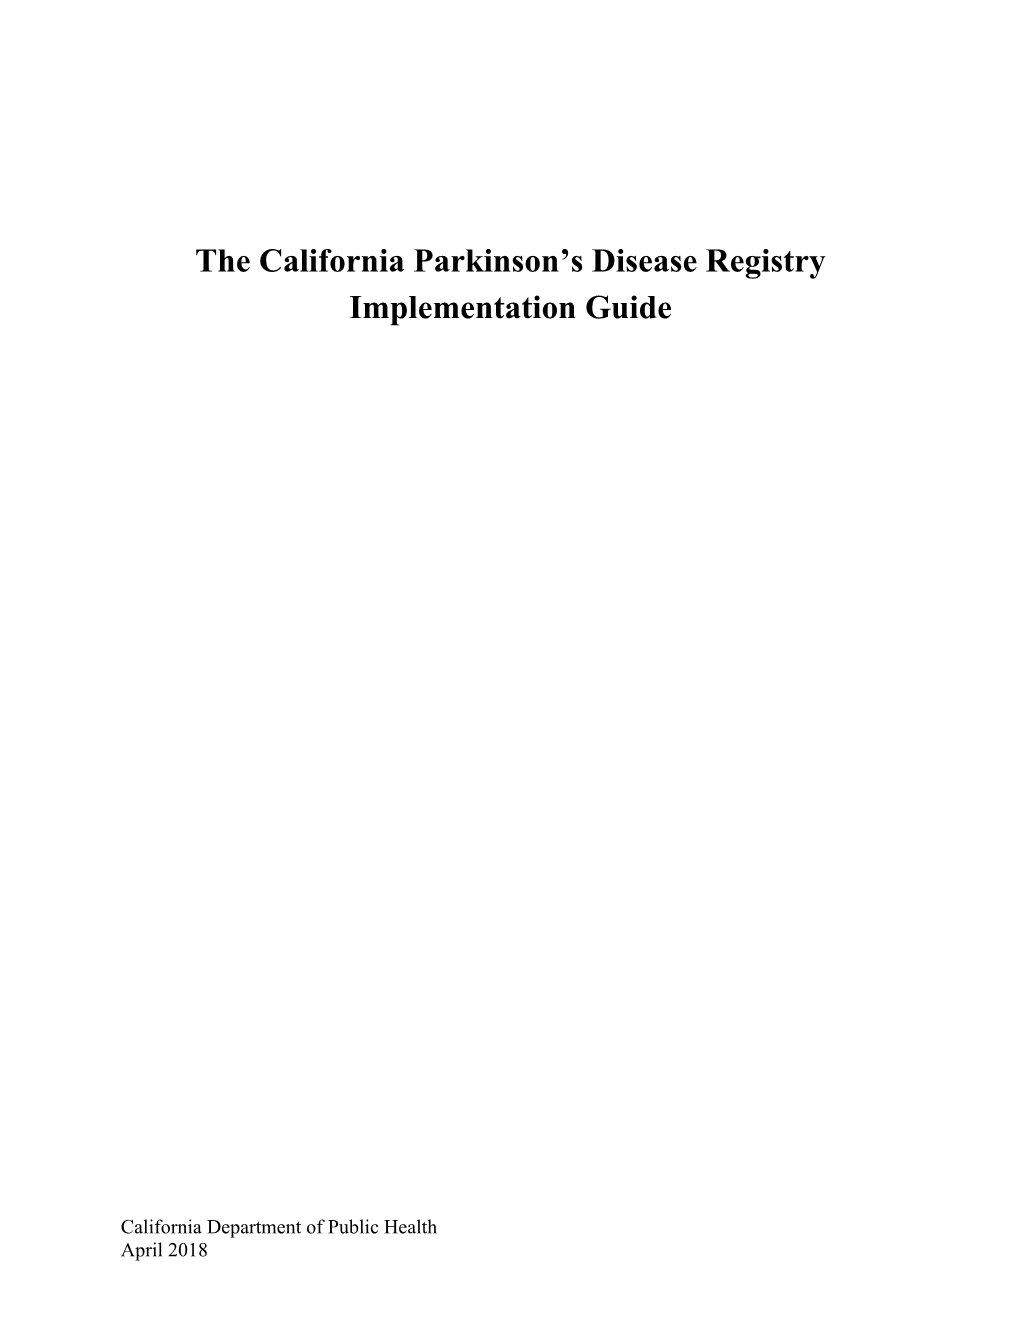 CA Parkinson's Disease Registry, Reporting Implementation Guide